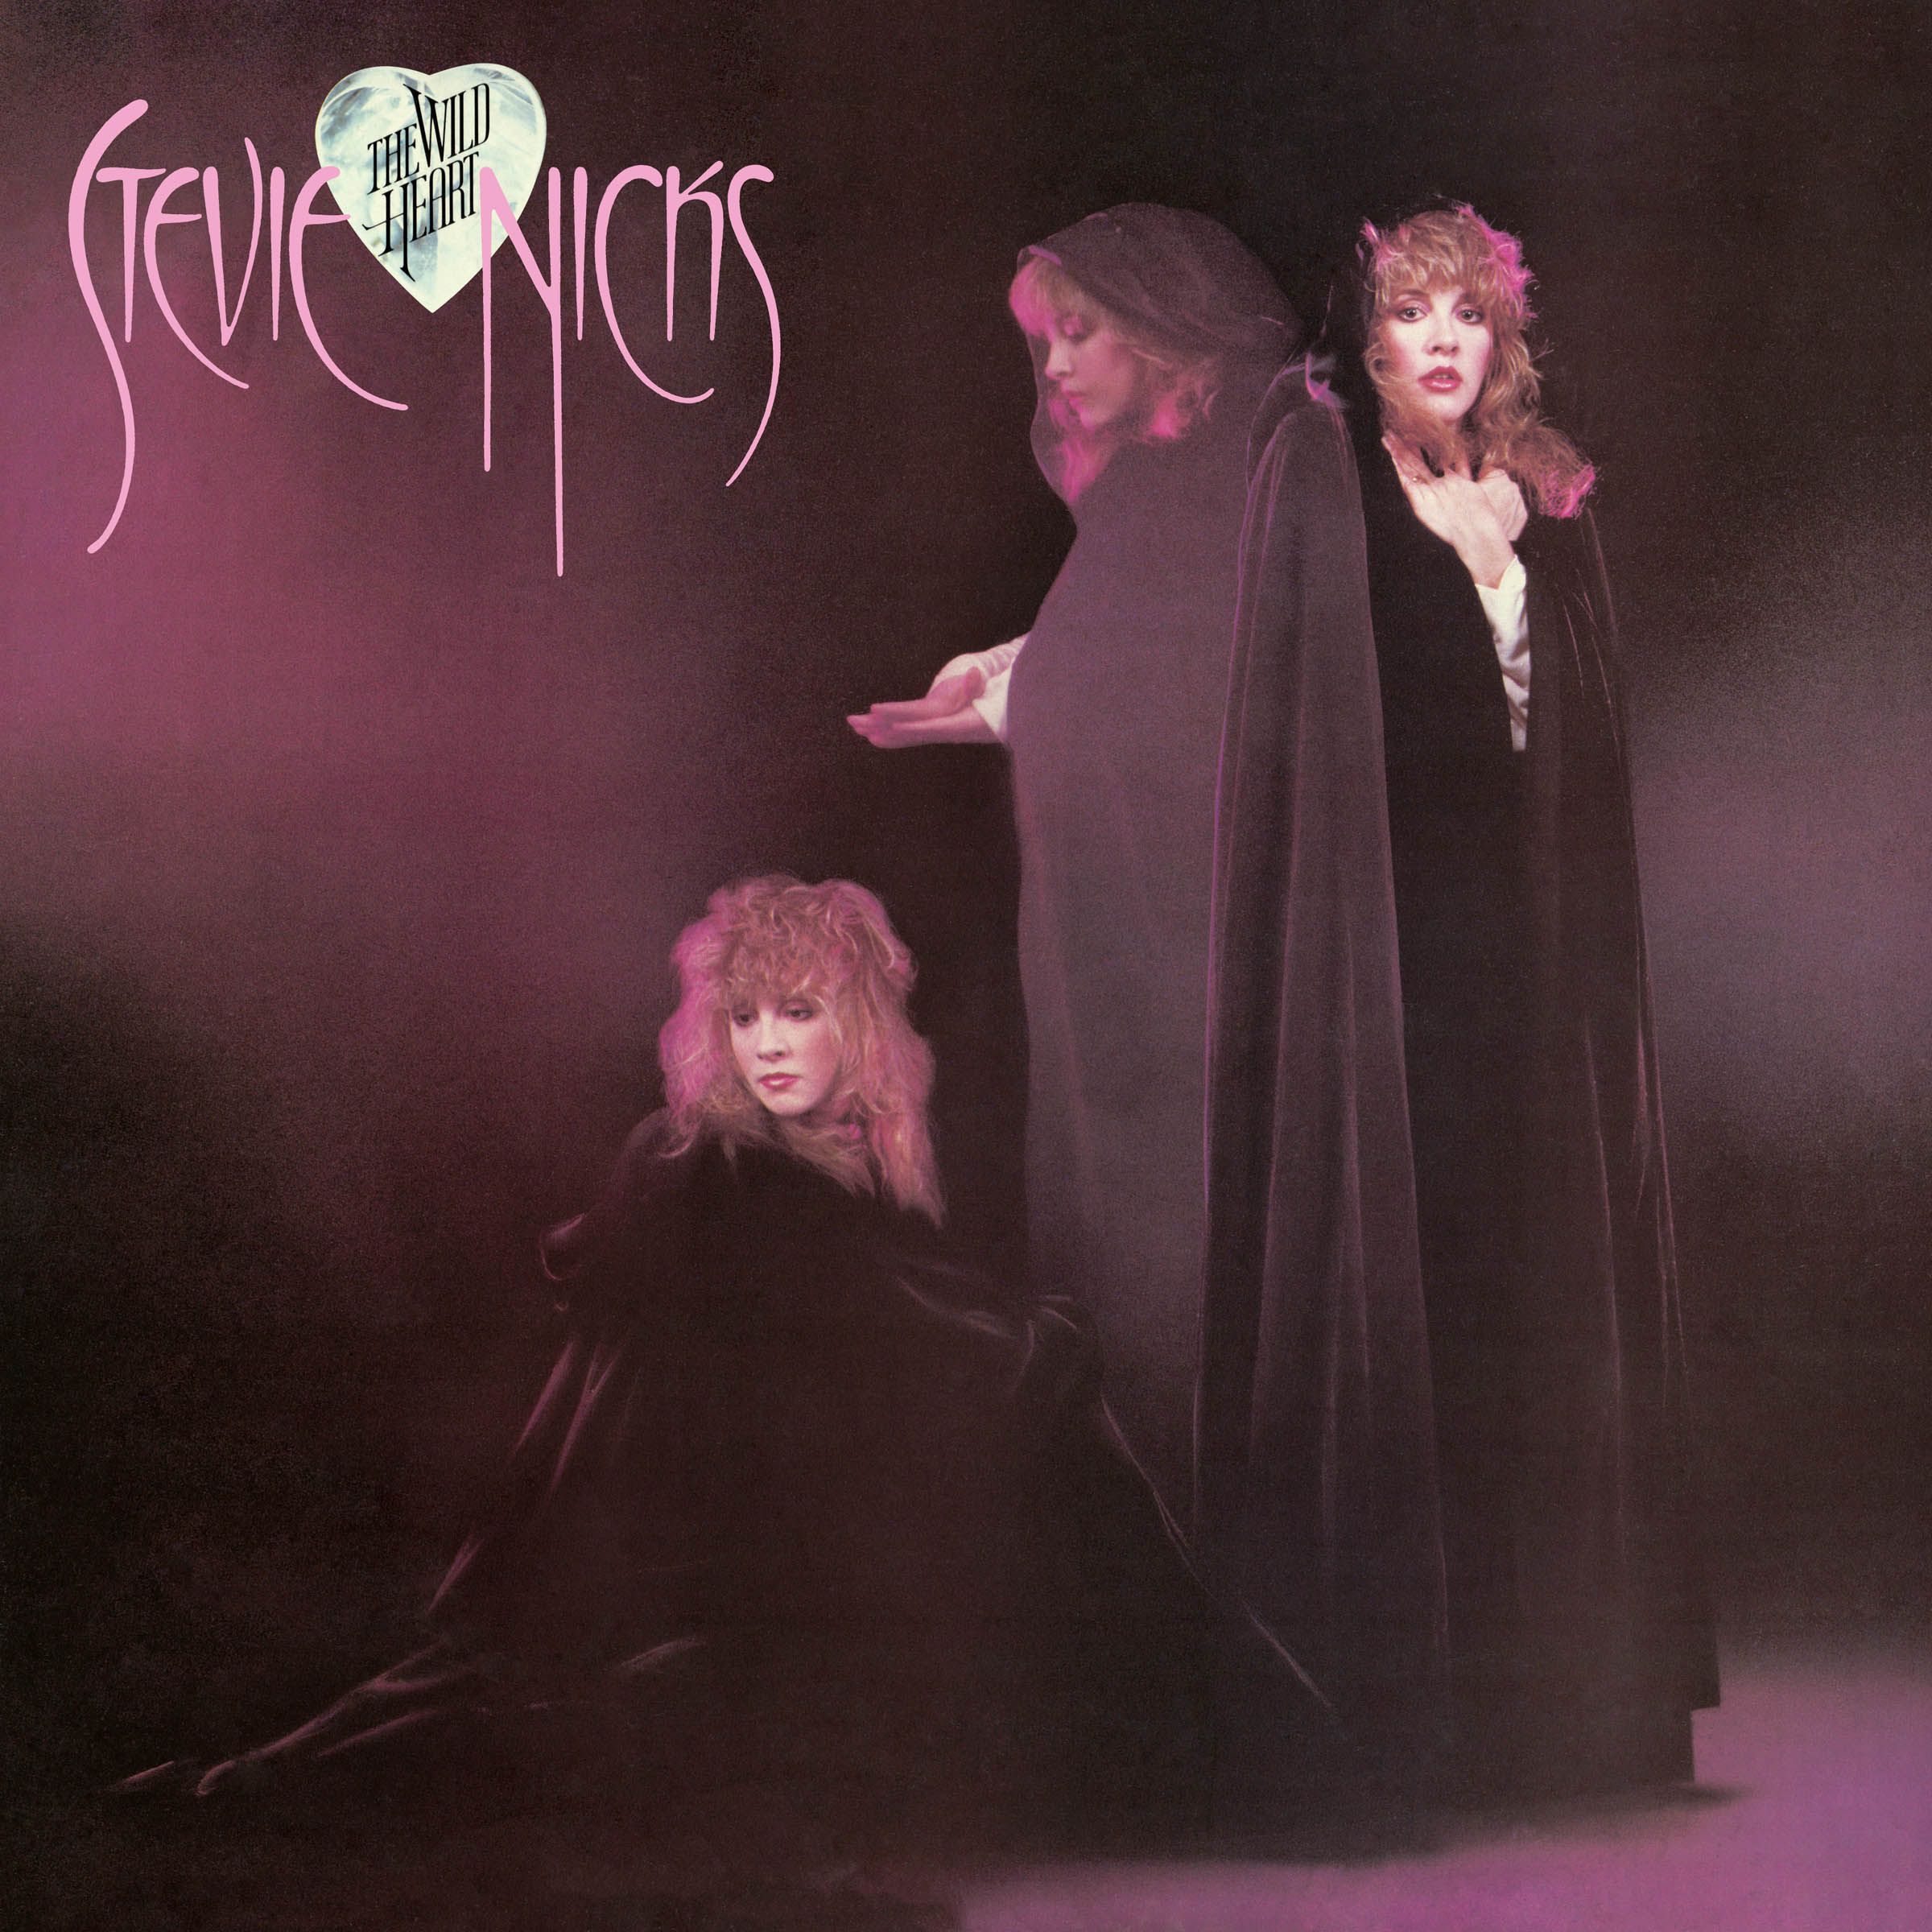 Stevie Nicks – The Wild Heart {Deluxe Edition} (1983/2016) [HDTracks FLAC 24bit/96kHz]